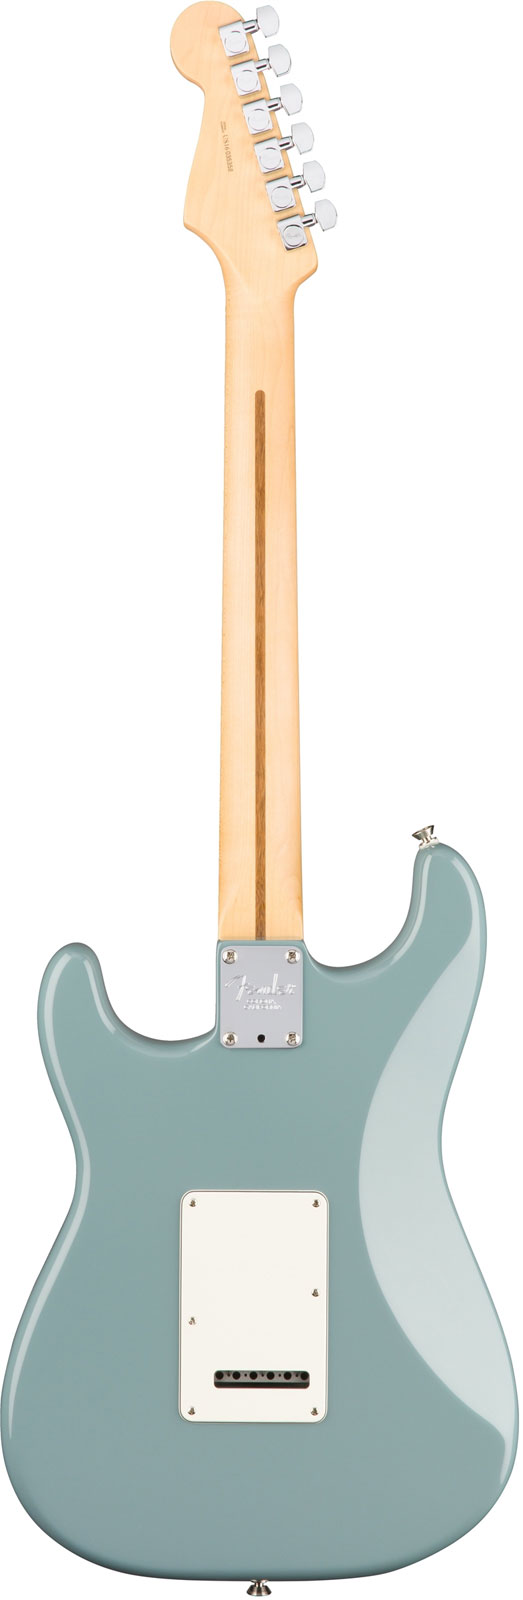 Fender Strat American Professional 2017 3s Usa Mn - Sonic Grey - Str shape electric guitar - Variation 2